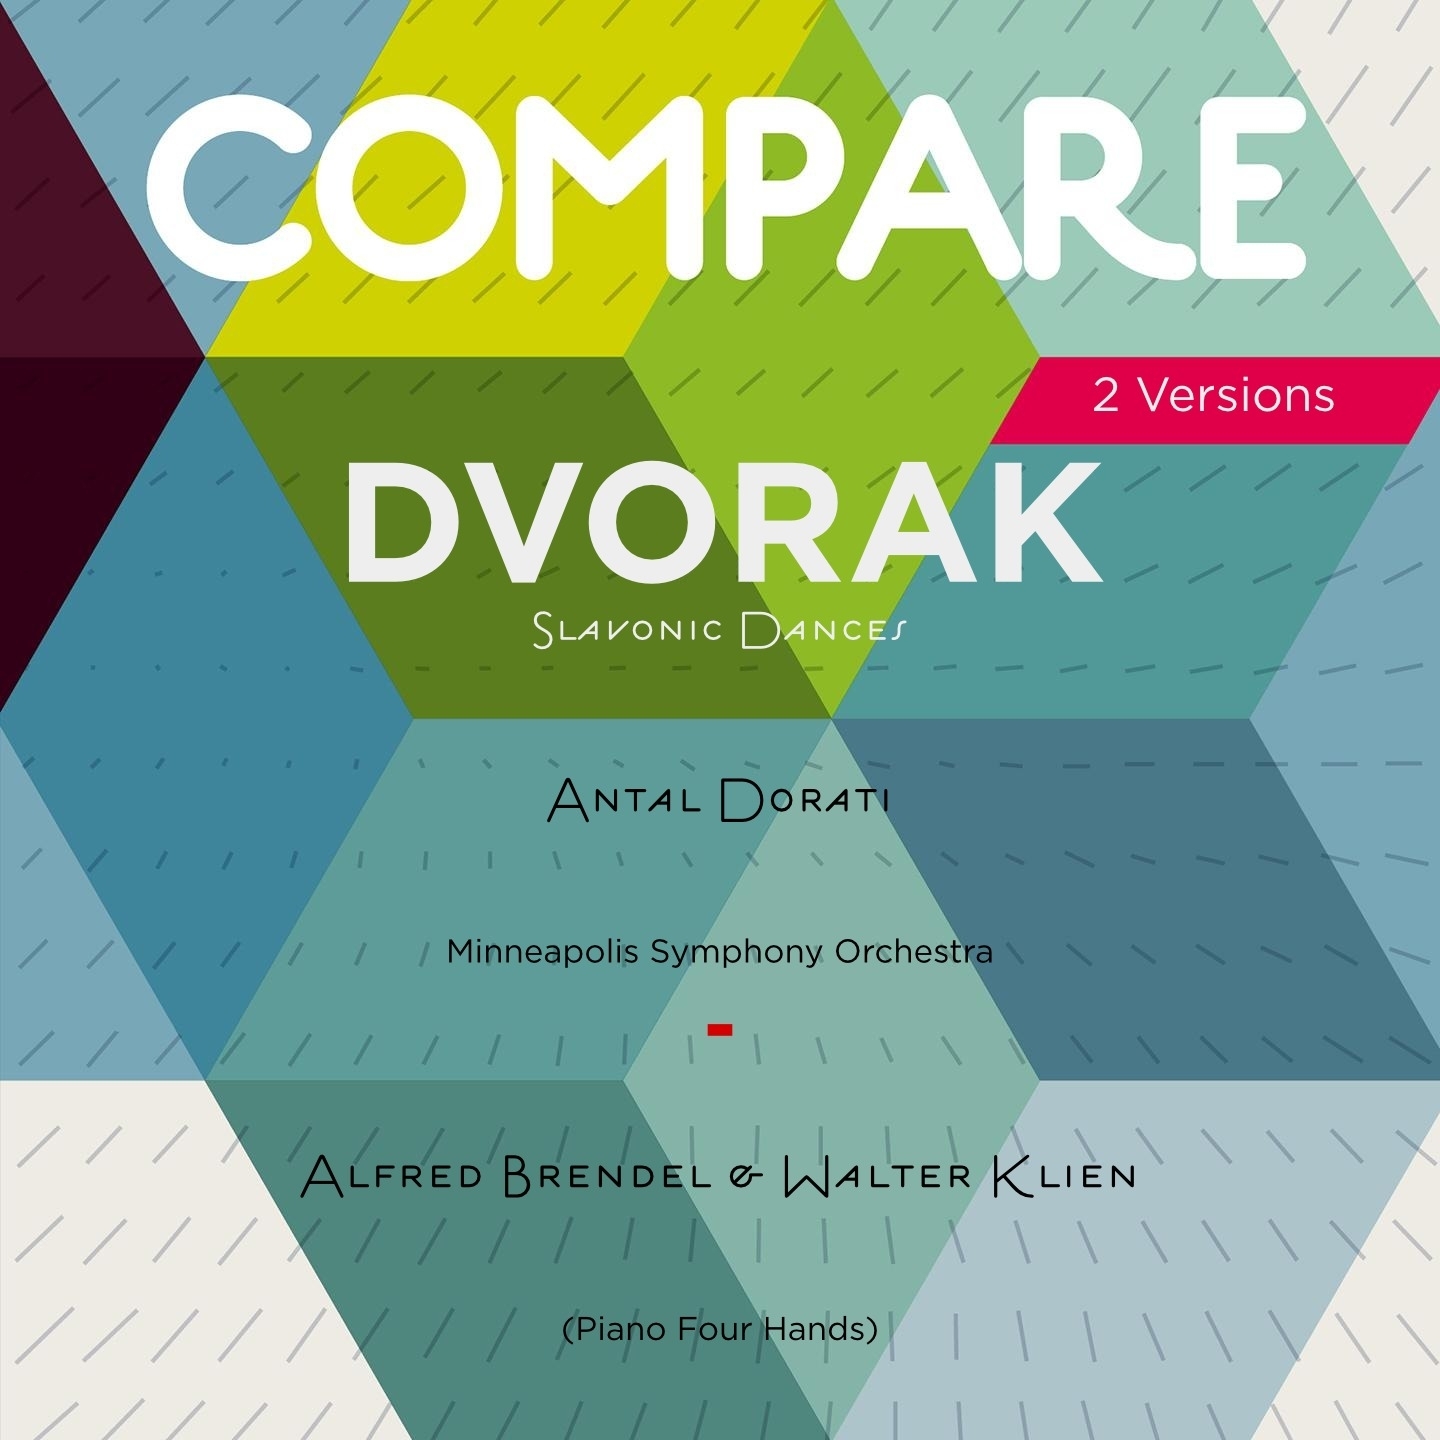 Dvoa k: Slavonic Dances, Op. 46, B. 83  78, Antal Dorati vs. Alfred Brendel and Walter Klien